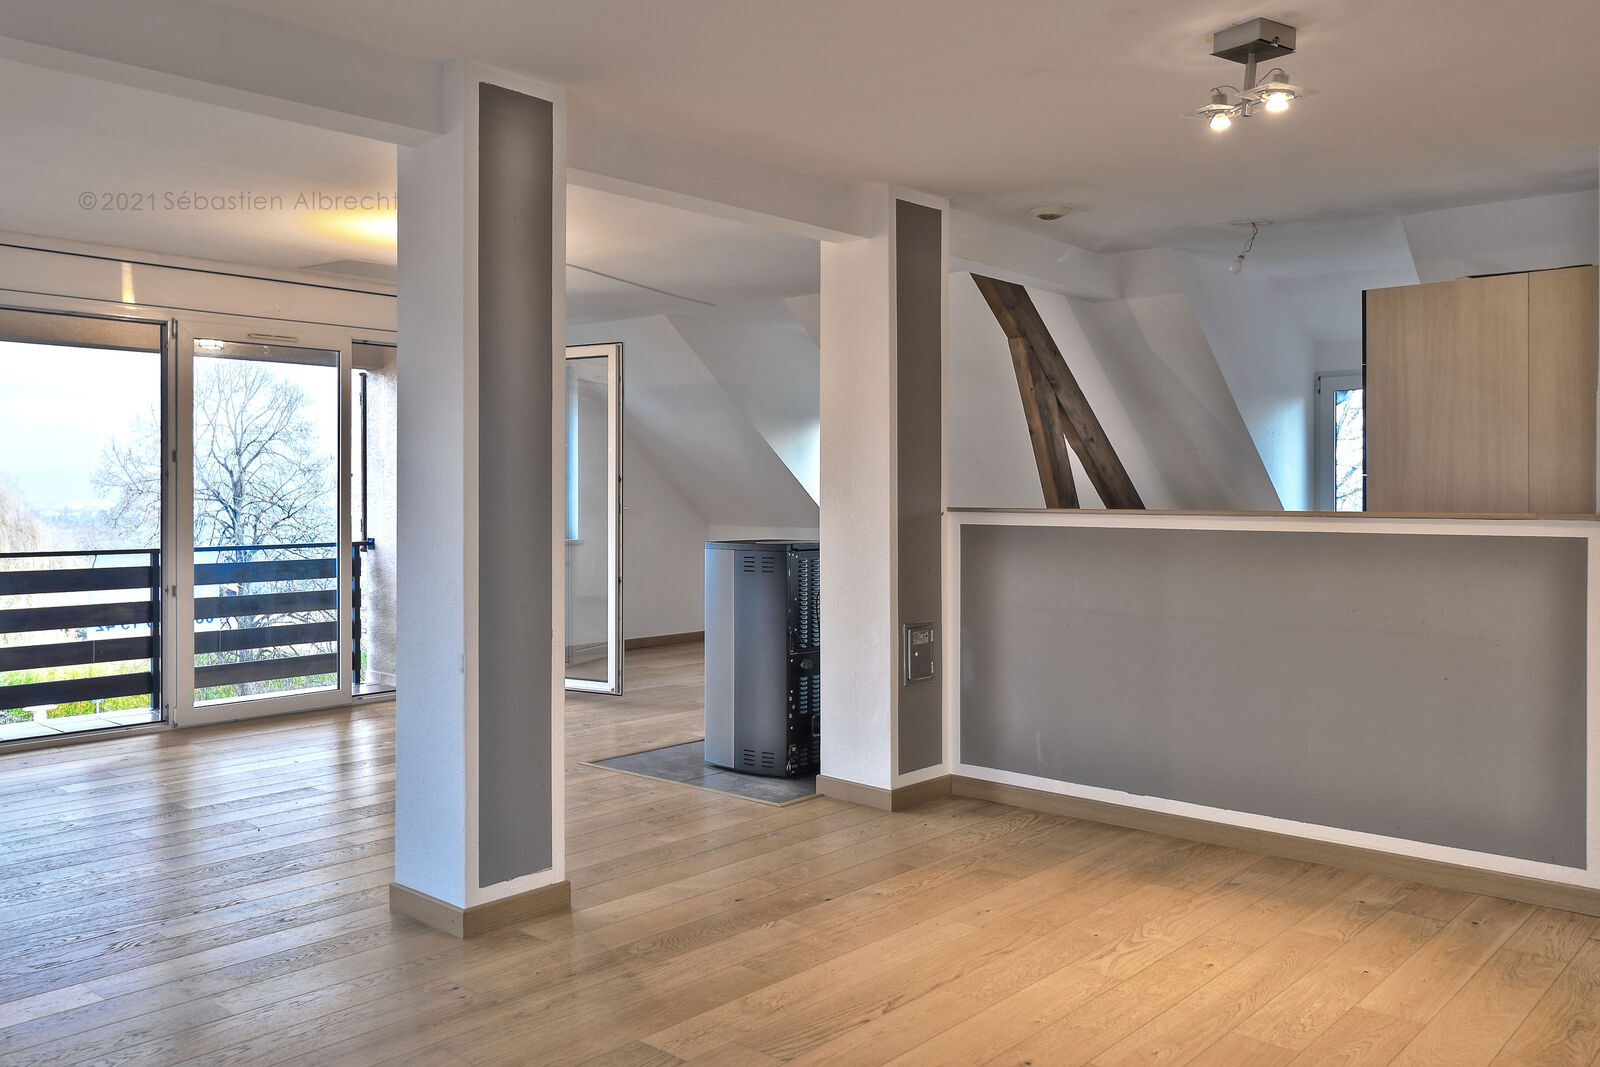 Vendu: Appartement à Hégenheim 4 pièces 120m² (68220) - appartement a vendre hegenheim